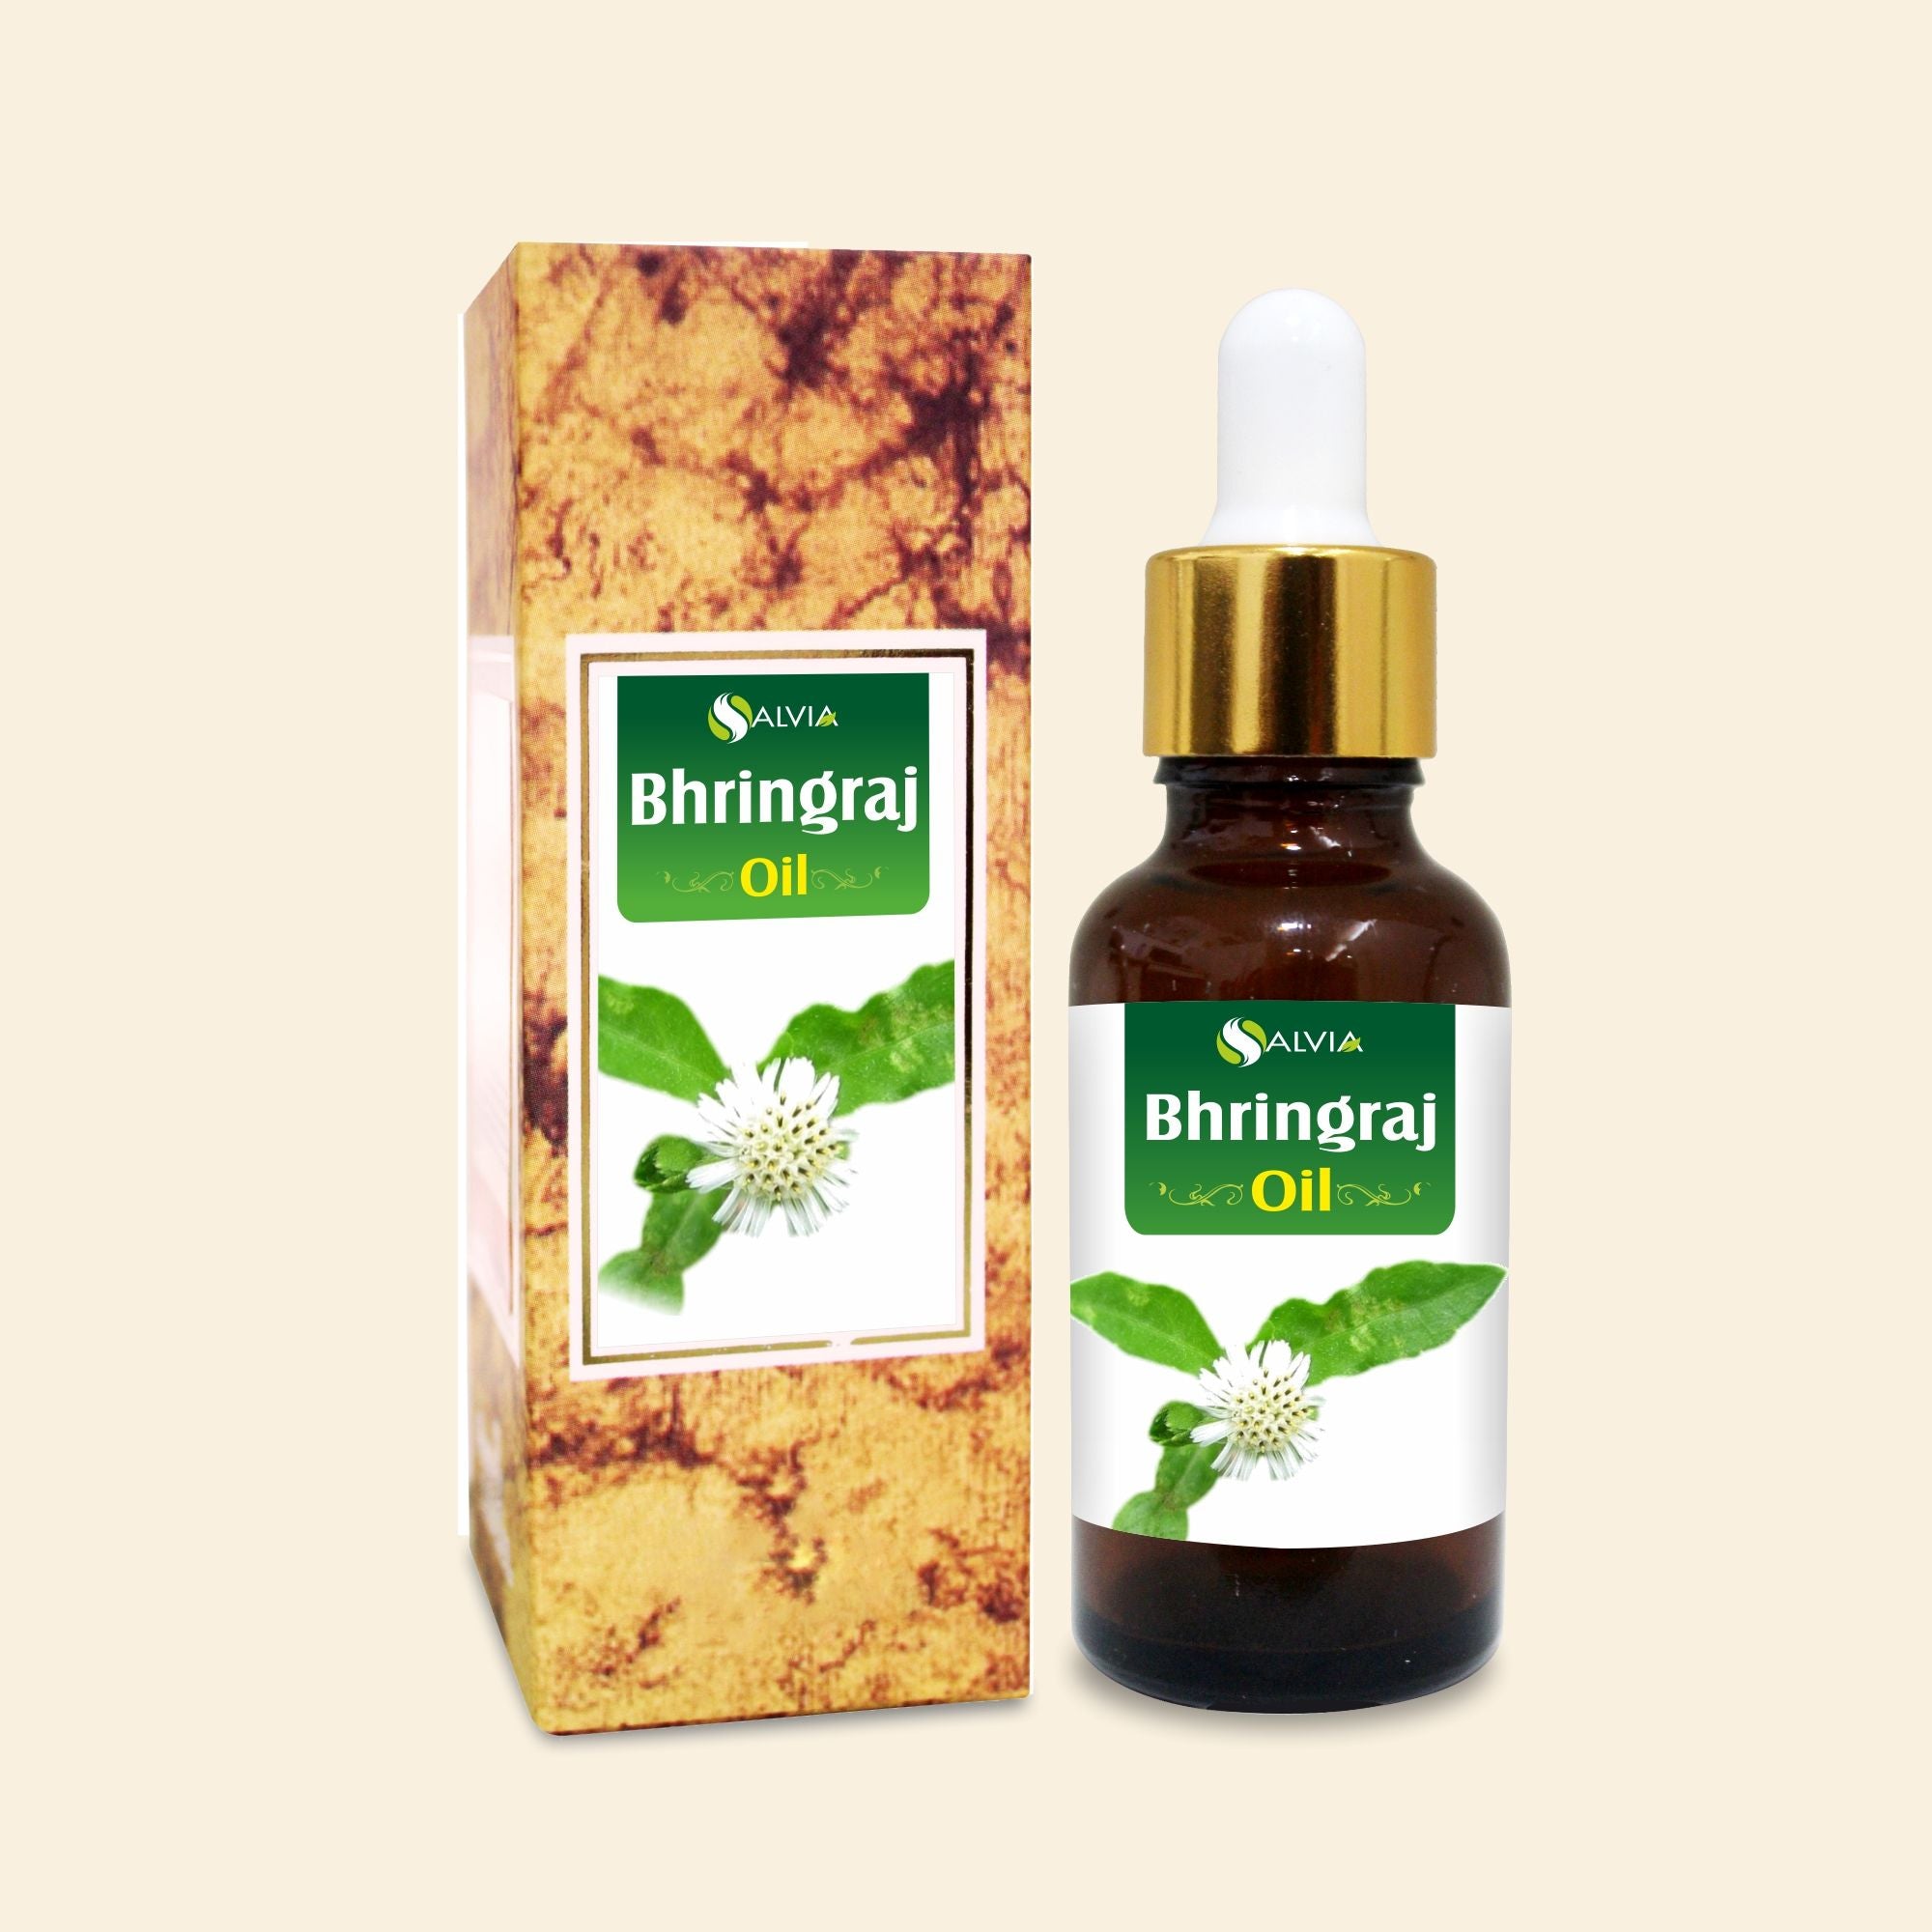 Salvia Infused Oils, Hair Fall,Anti hair fall oil Pure Bhringraj Oil for Hair